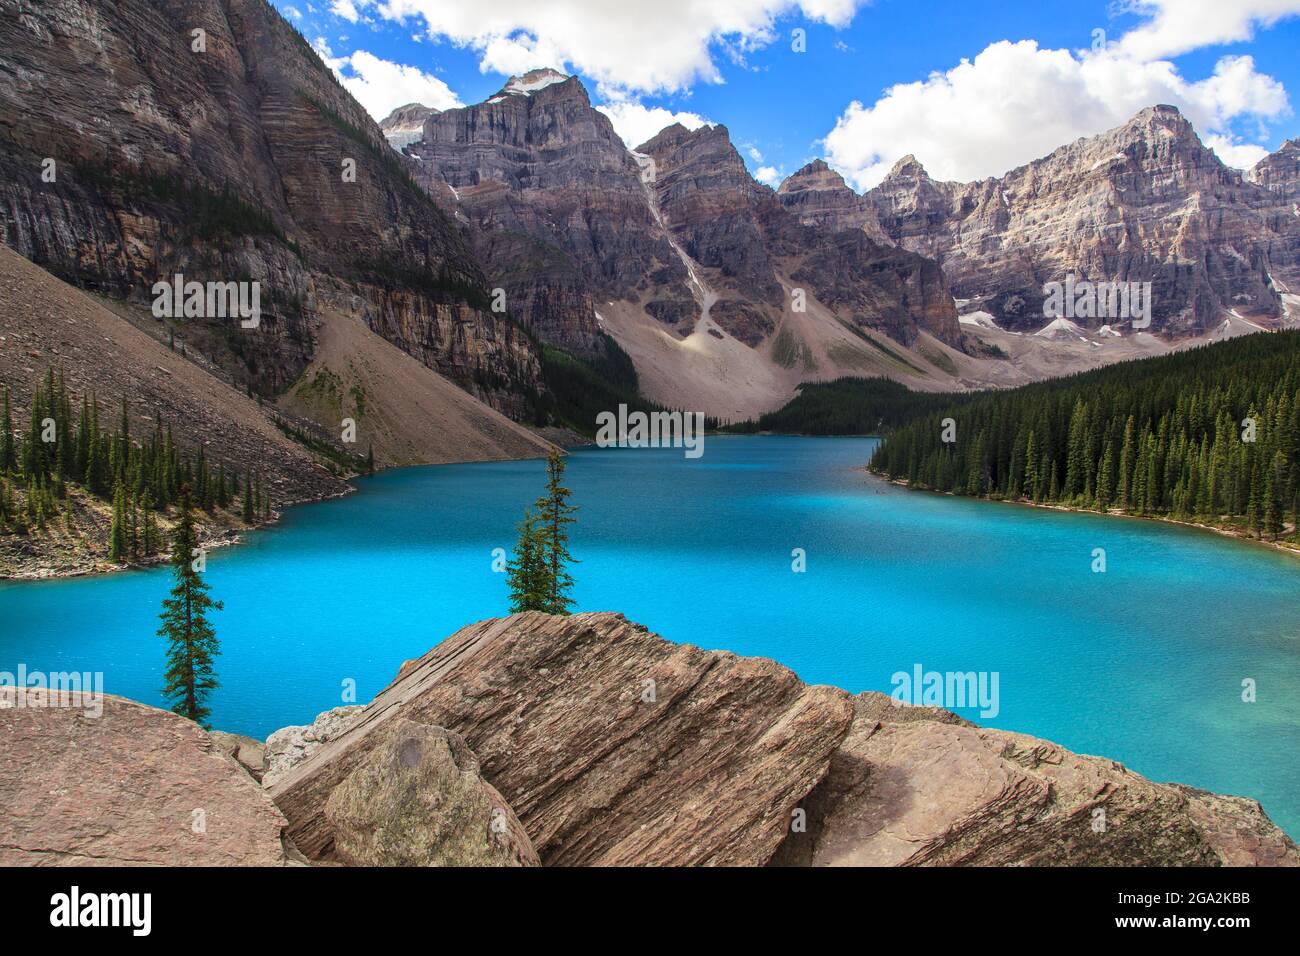 Lac Moraine, dans la vallée des dix pics, parc national Banff; Alberta, Canada Banque D'Images